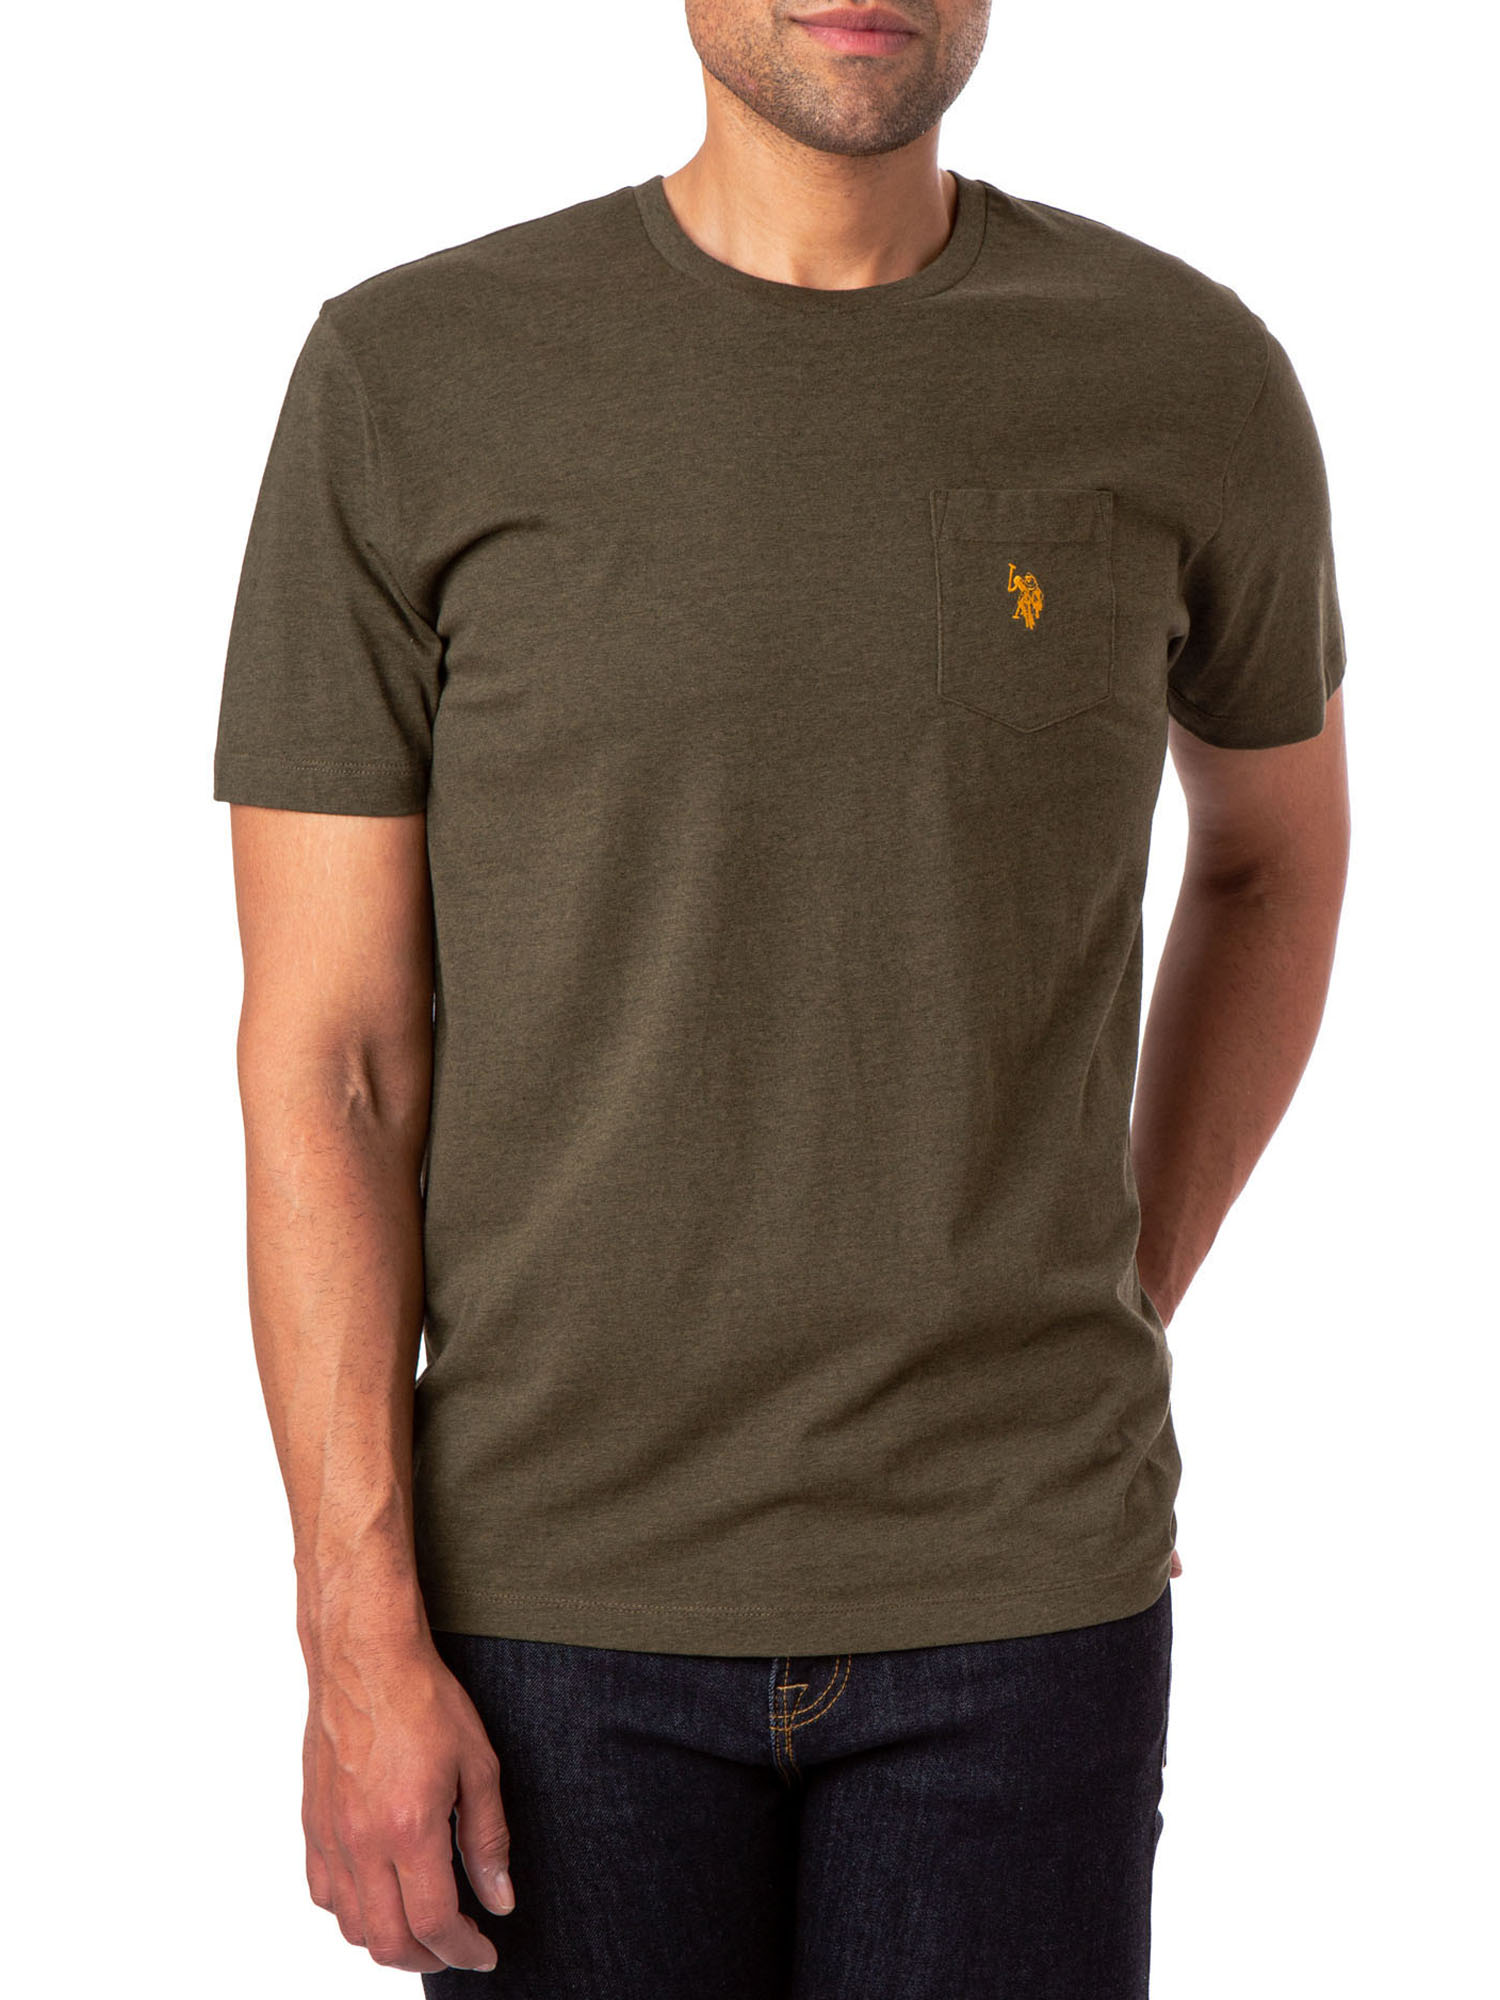 U.S. Polo Assn. Men's Crew Neck Pocket T-Shirt - image 1 of 3